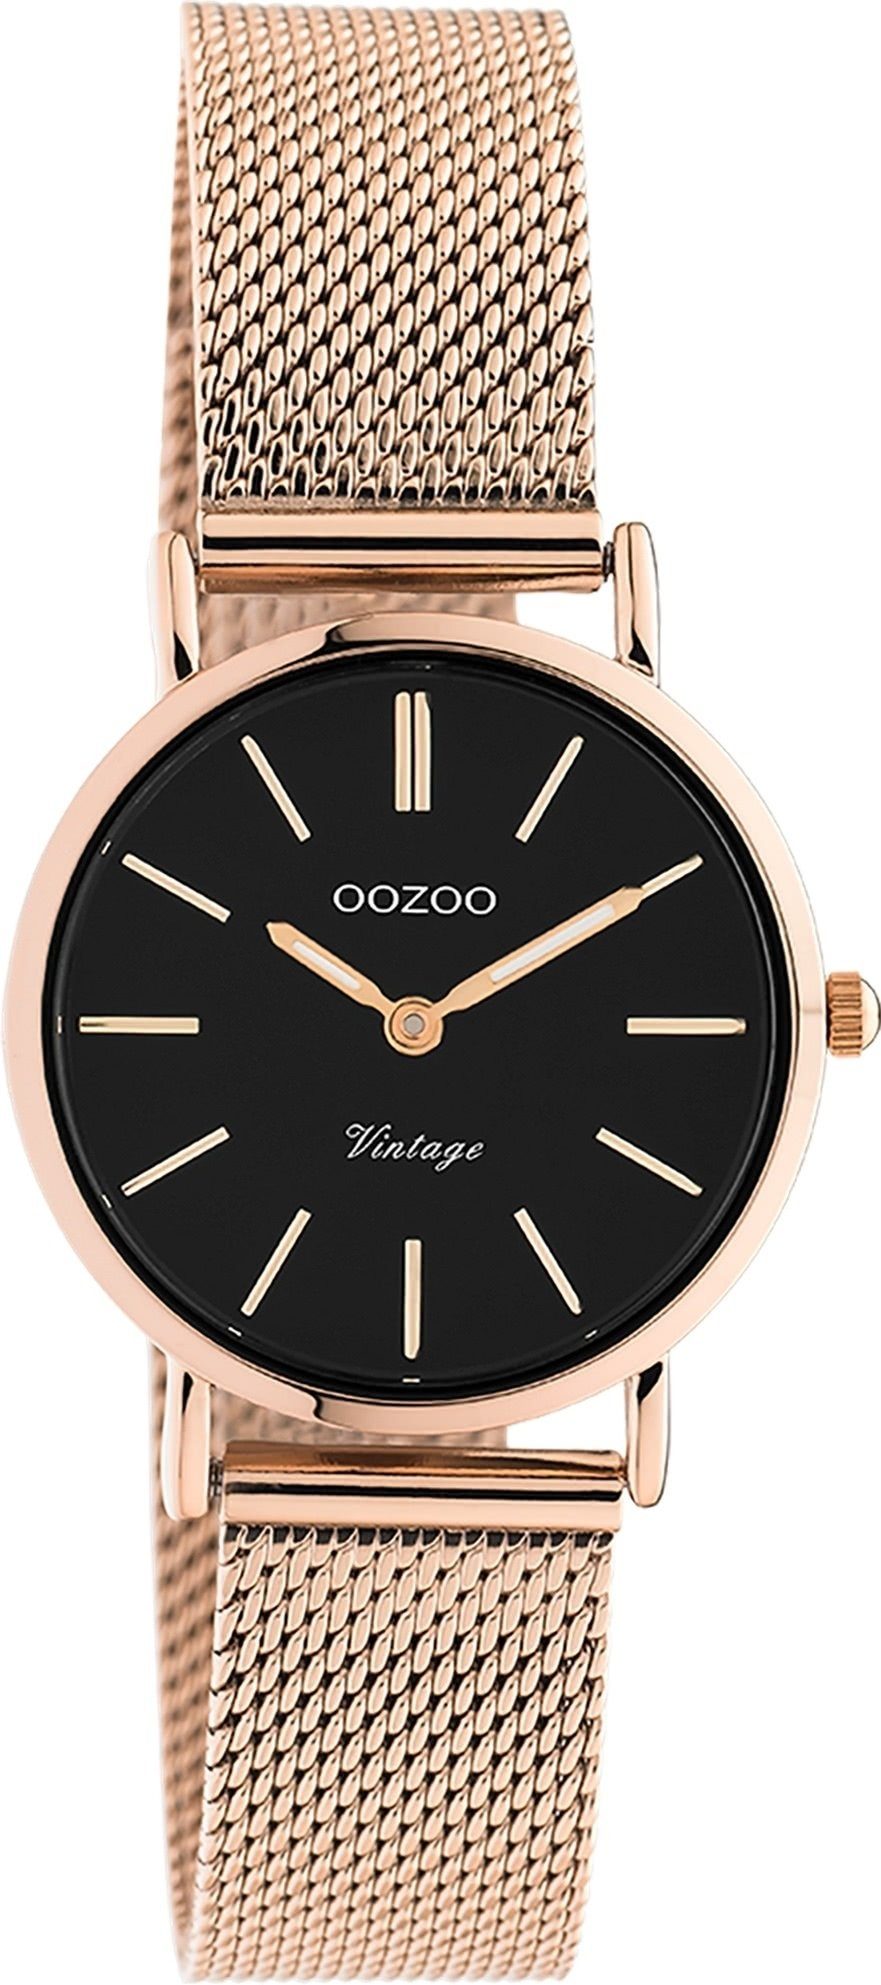 OOZOO Quarzuhr Oozoo Unisex Armbanduhr roségold Analog, (Analoguhr), Damen, Herrenuhr rund, klein (ca 28mm) Edelstahlarmband, Elegant-Style